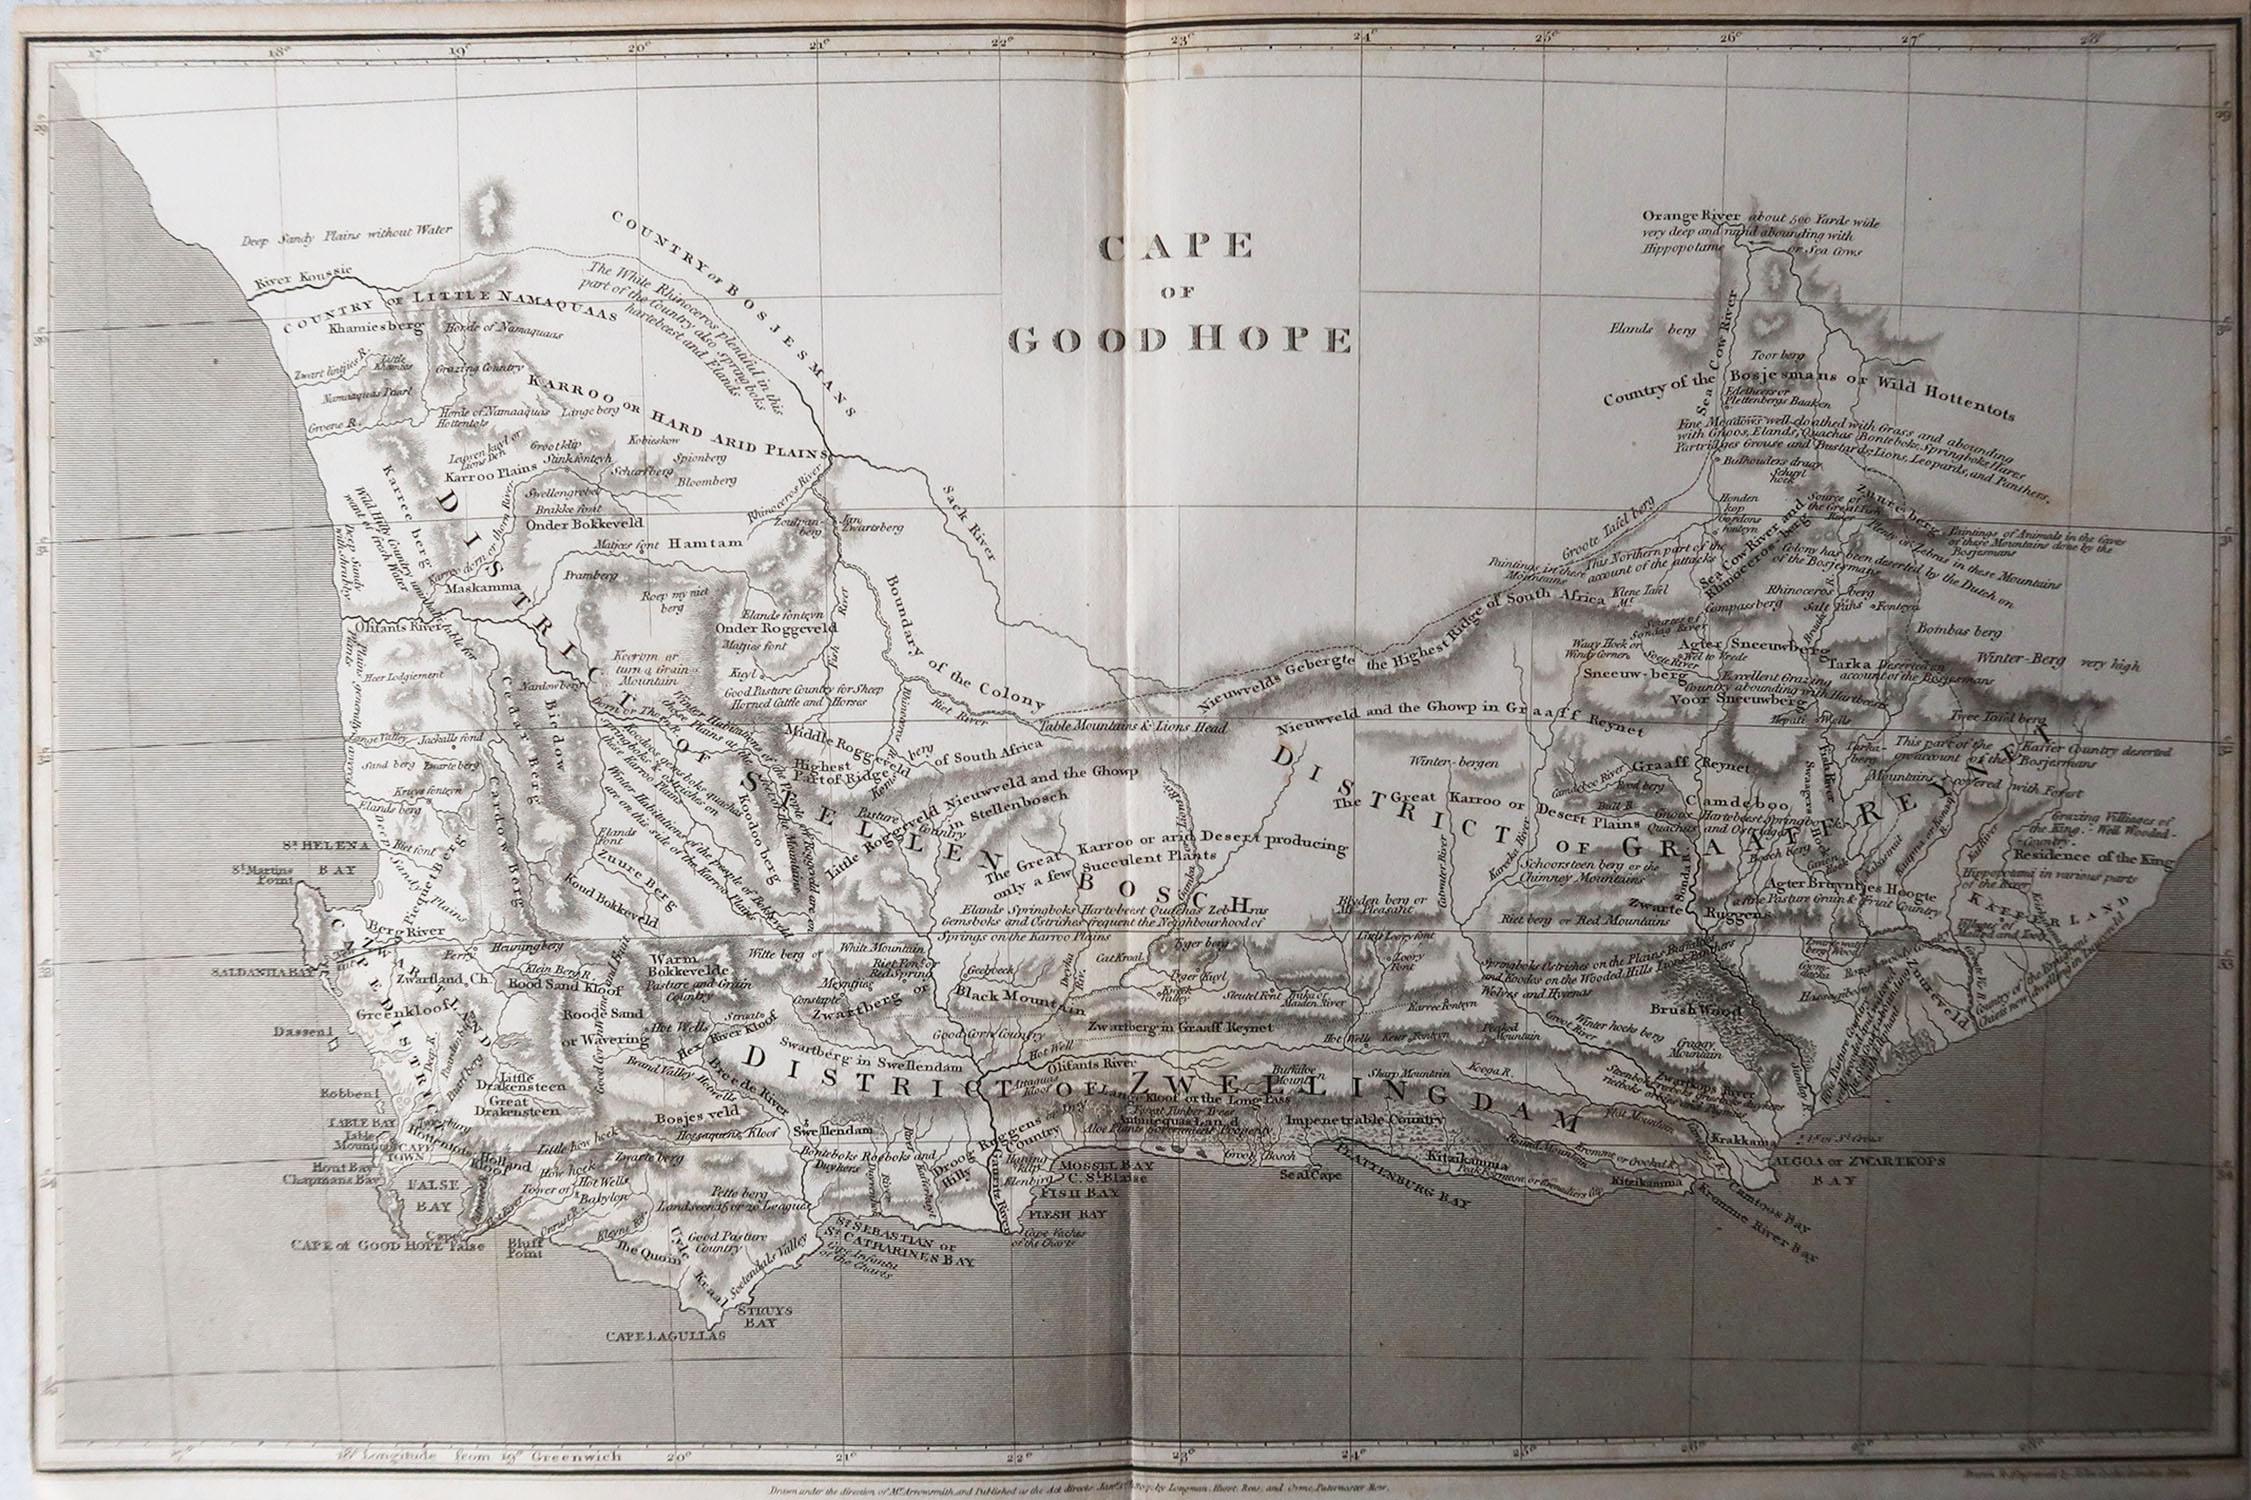 Originale antike Karte Südafrikas, Pfeilerschmied, 1820